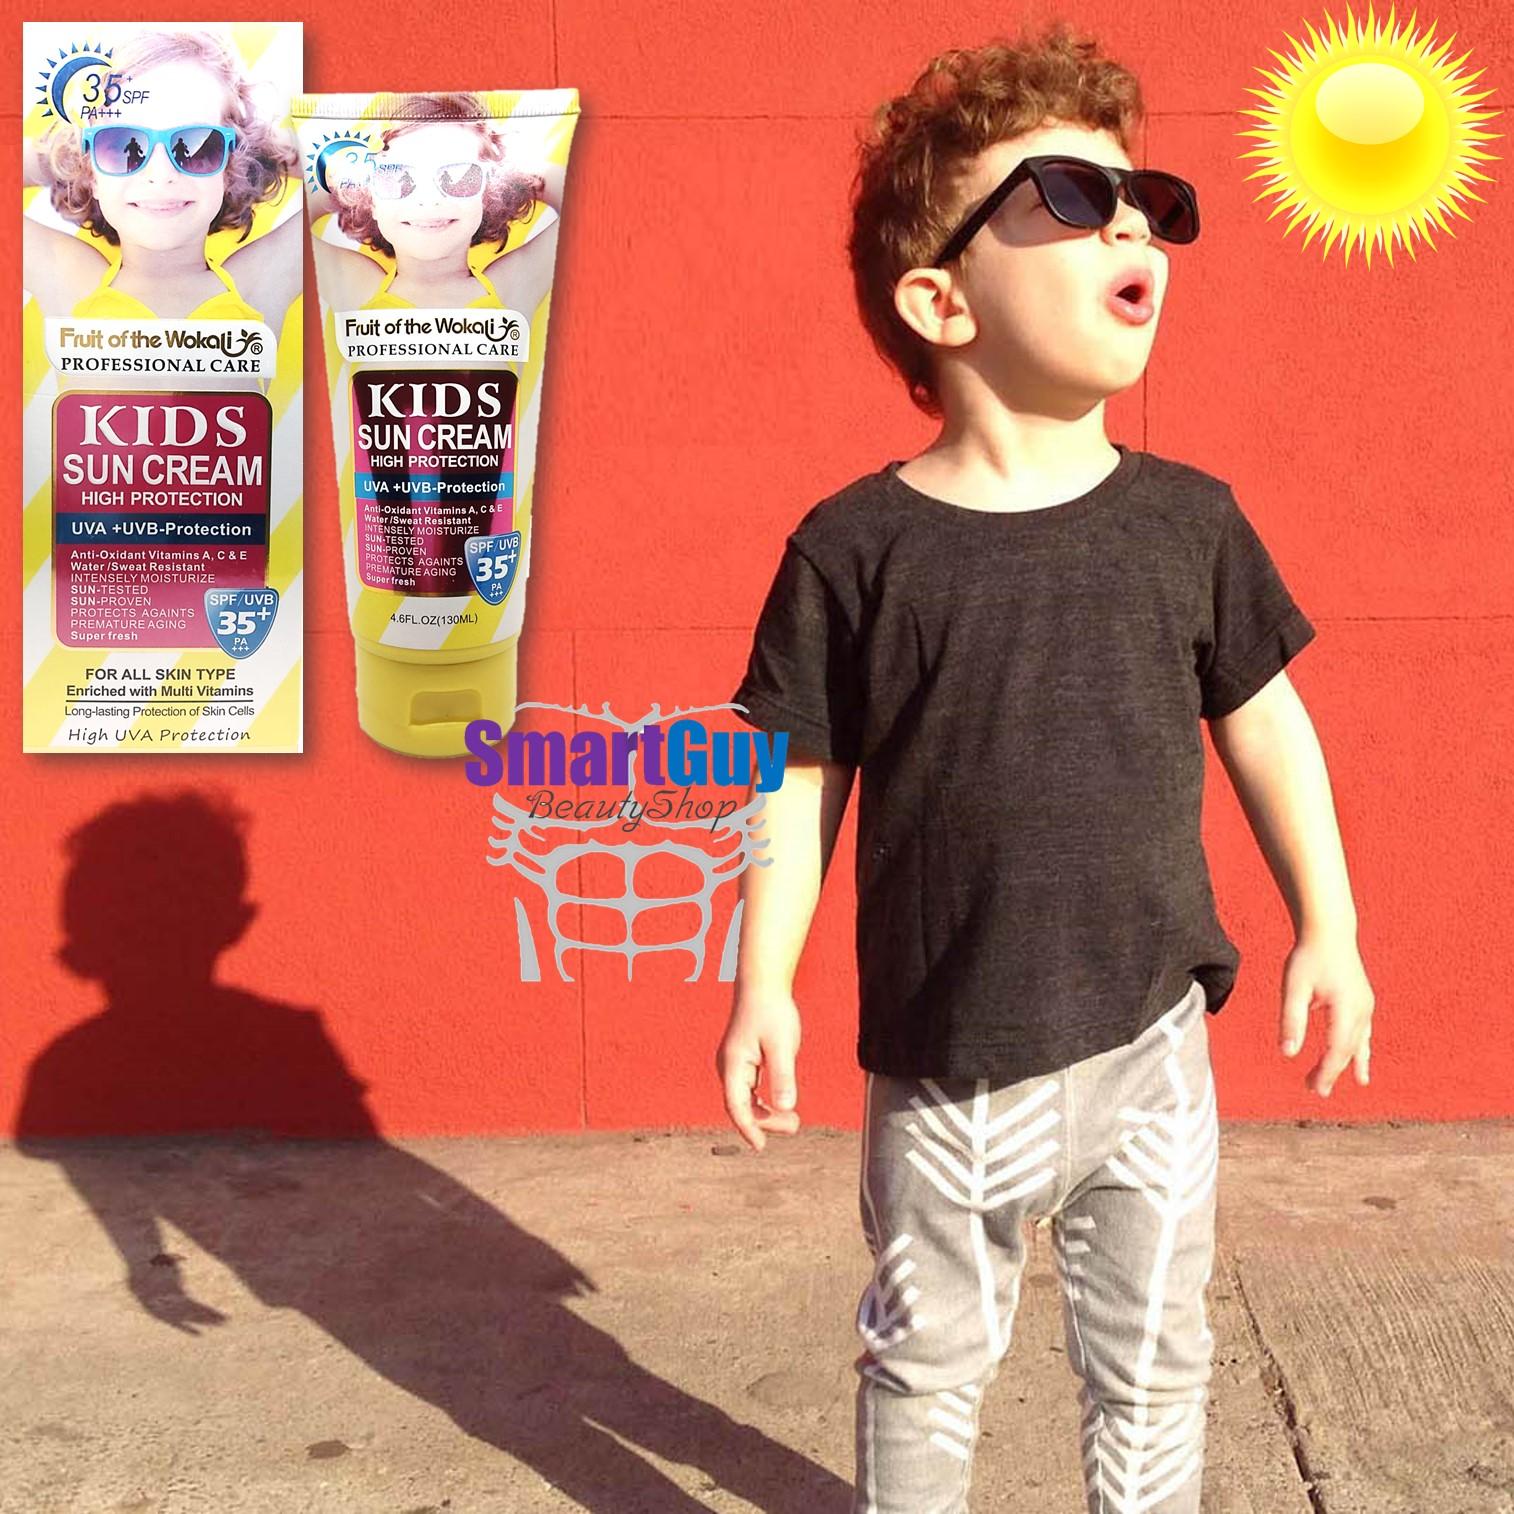 Wakali Kids Sun Cream High Protection SPF35 PA+++ 130g. ครีมกันแดดสูตรอ่อนโยนพิเศษสำหรับผิวเด็กวัย 5-12 ขวบพร้อมการบำรุงผิวเนียนนุ่มกระจ่างใสตลอดวัน